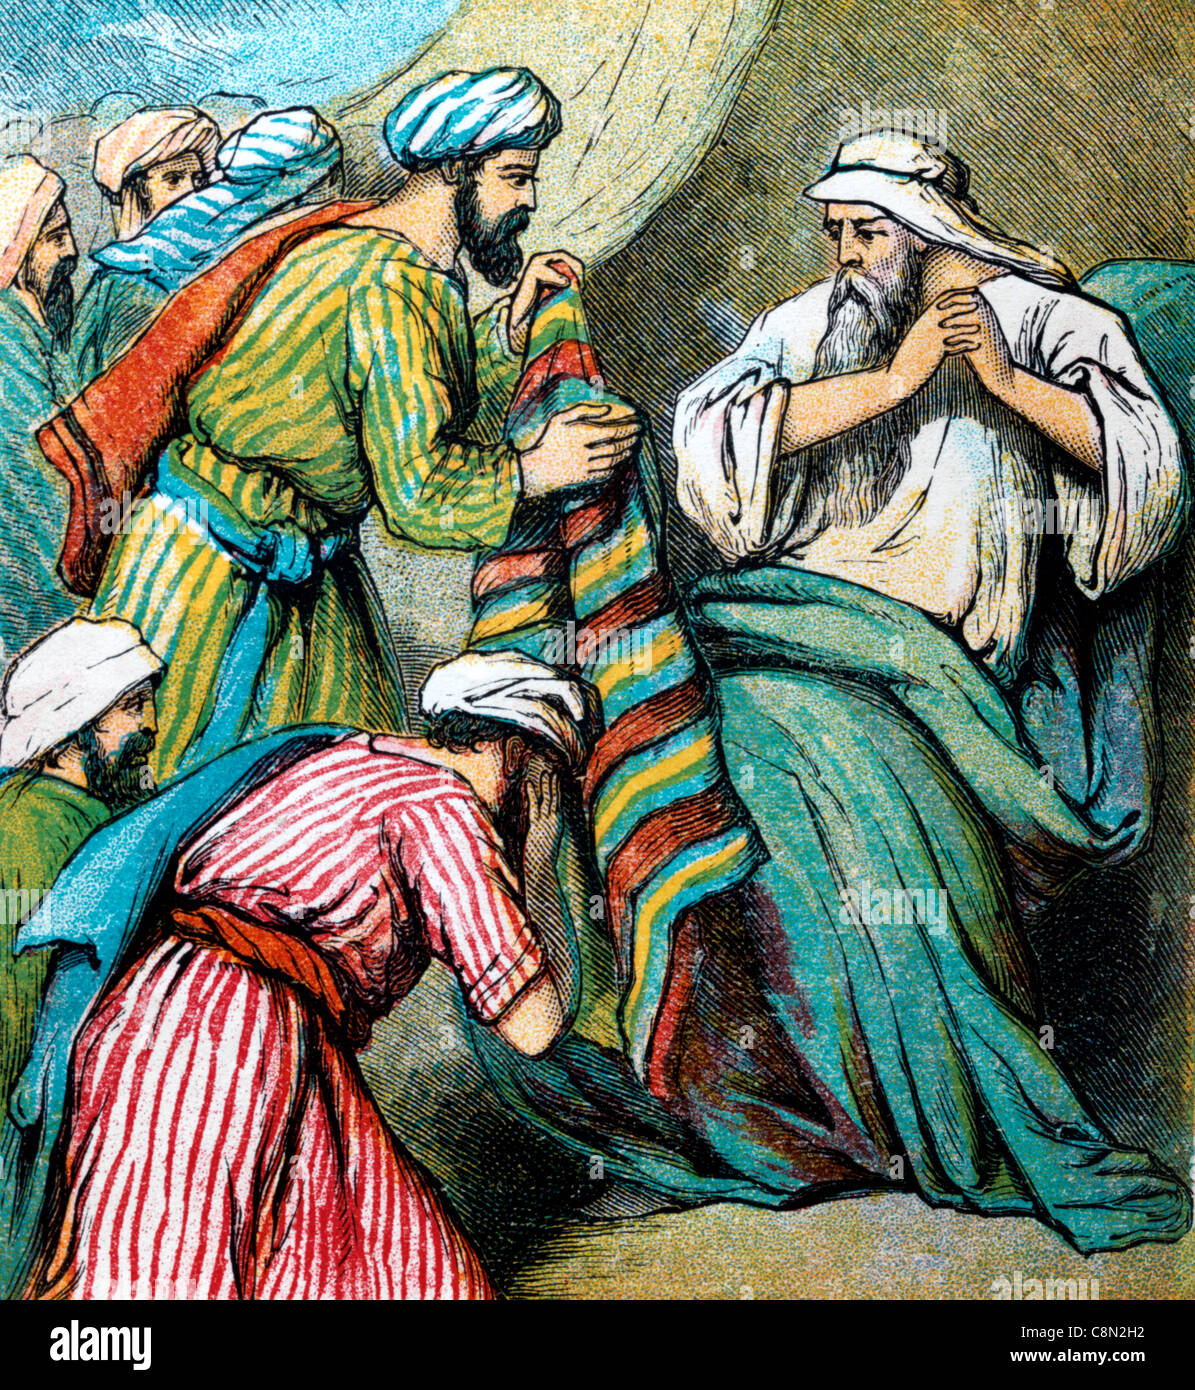 Bibelgeschichten - Illustration von Josephs Brüdern, die den blutigen bunten Mantel ihres Vaters Jacob Joseph zeigen Stockfoto